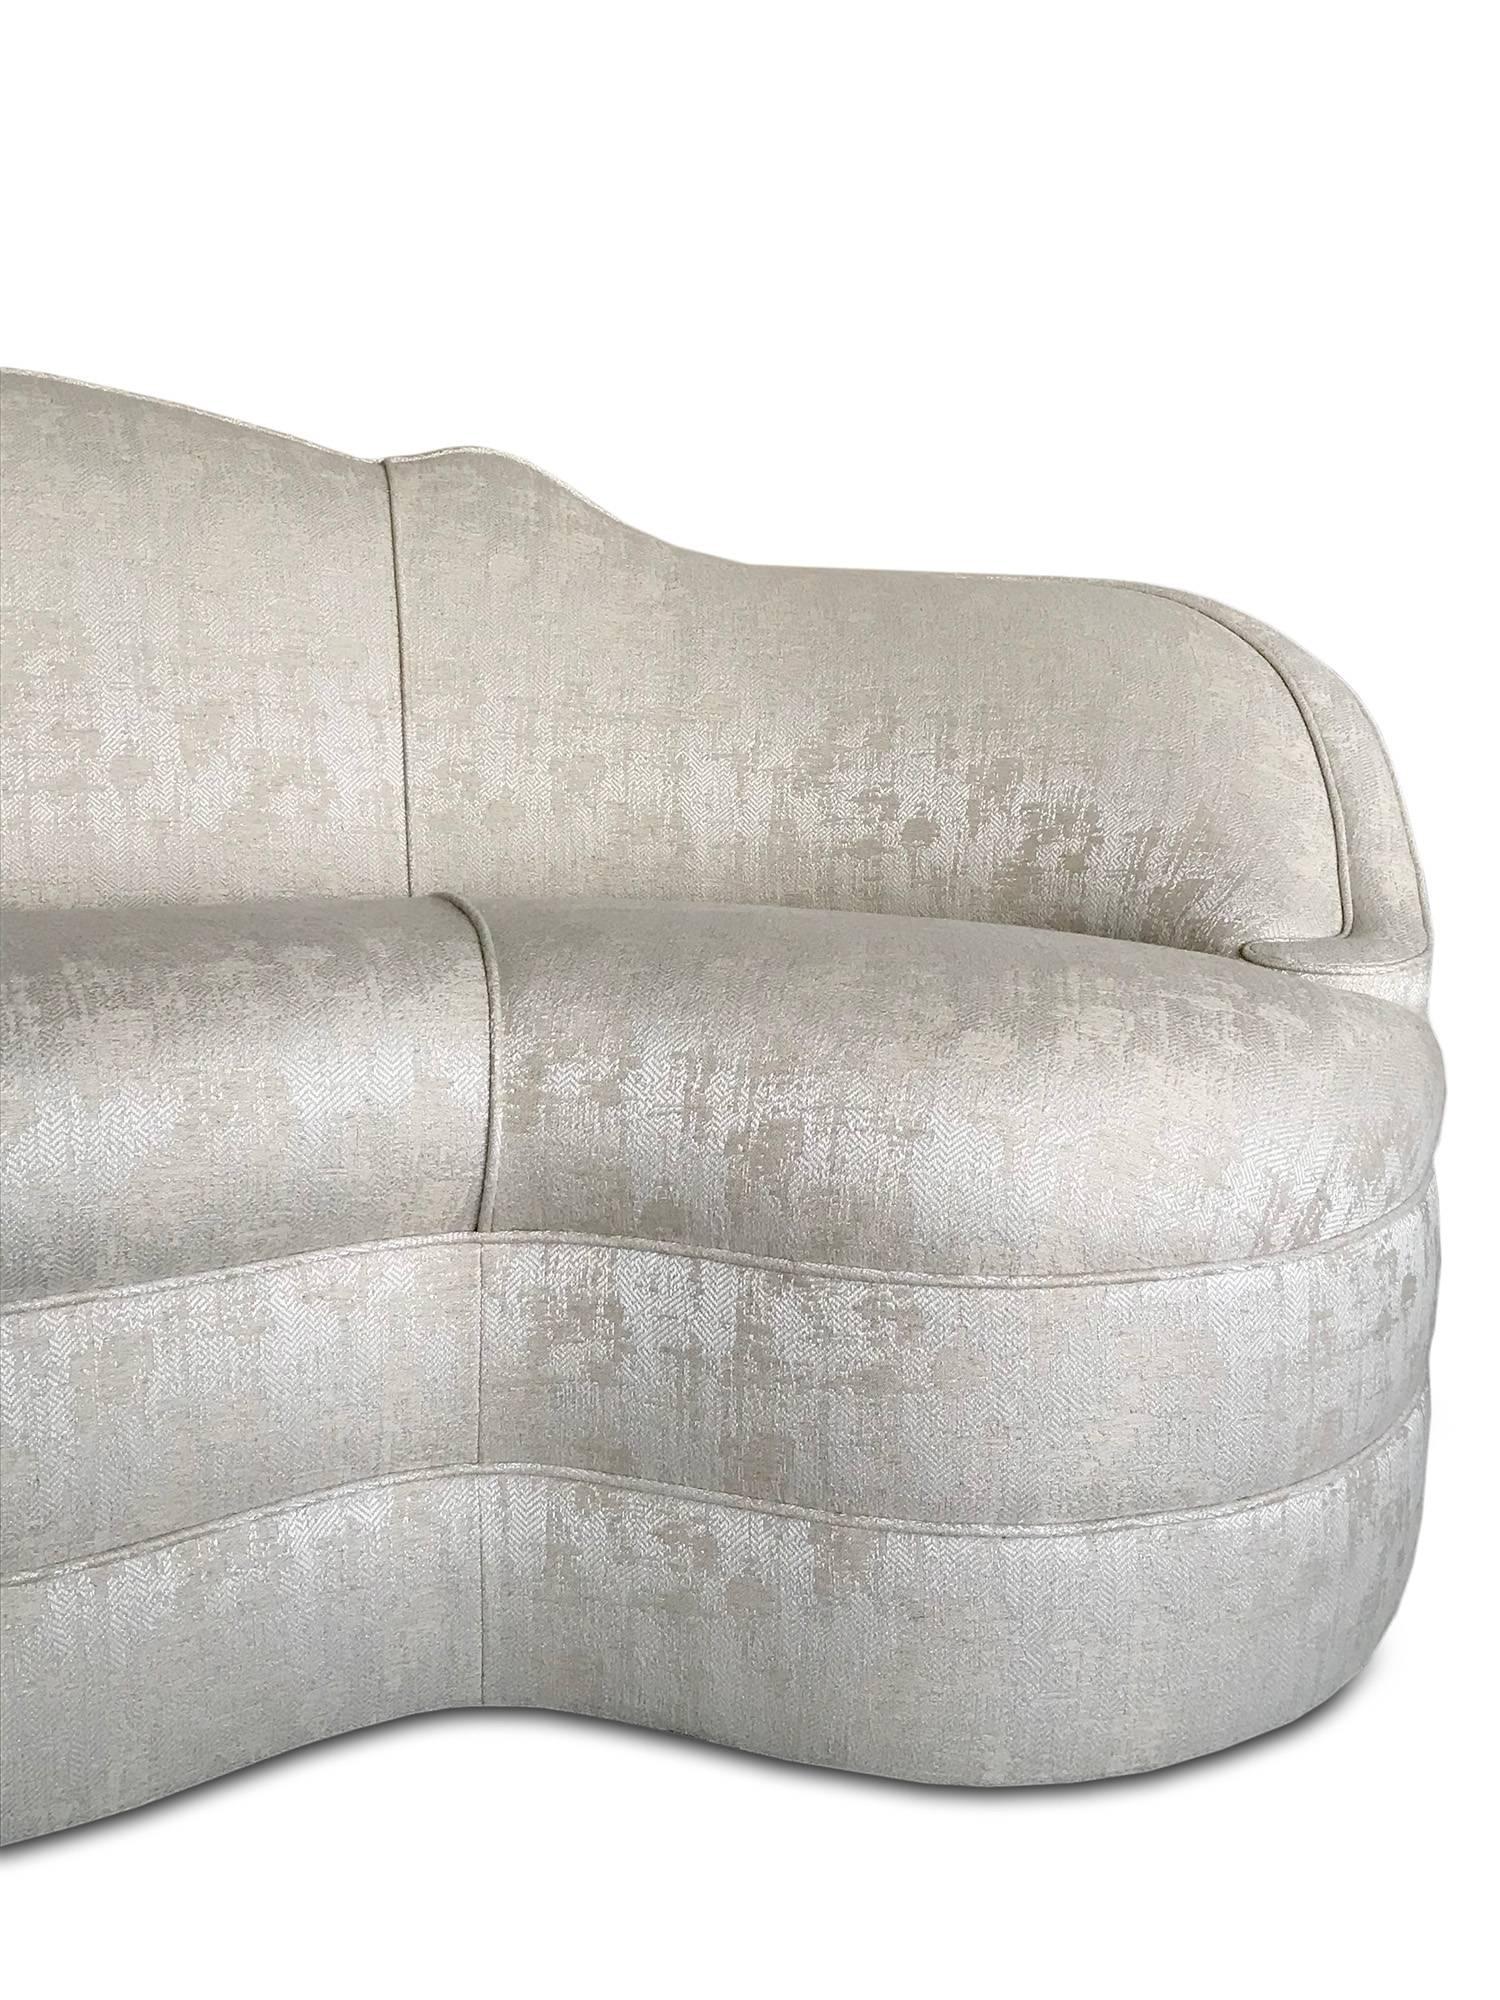 Schiaparelli Sofa by Michael Taylor Design 1